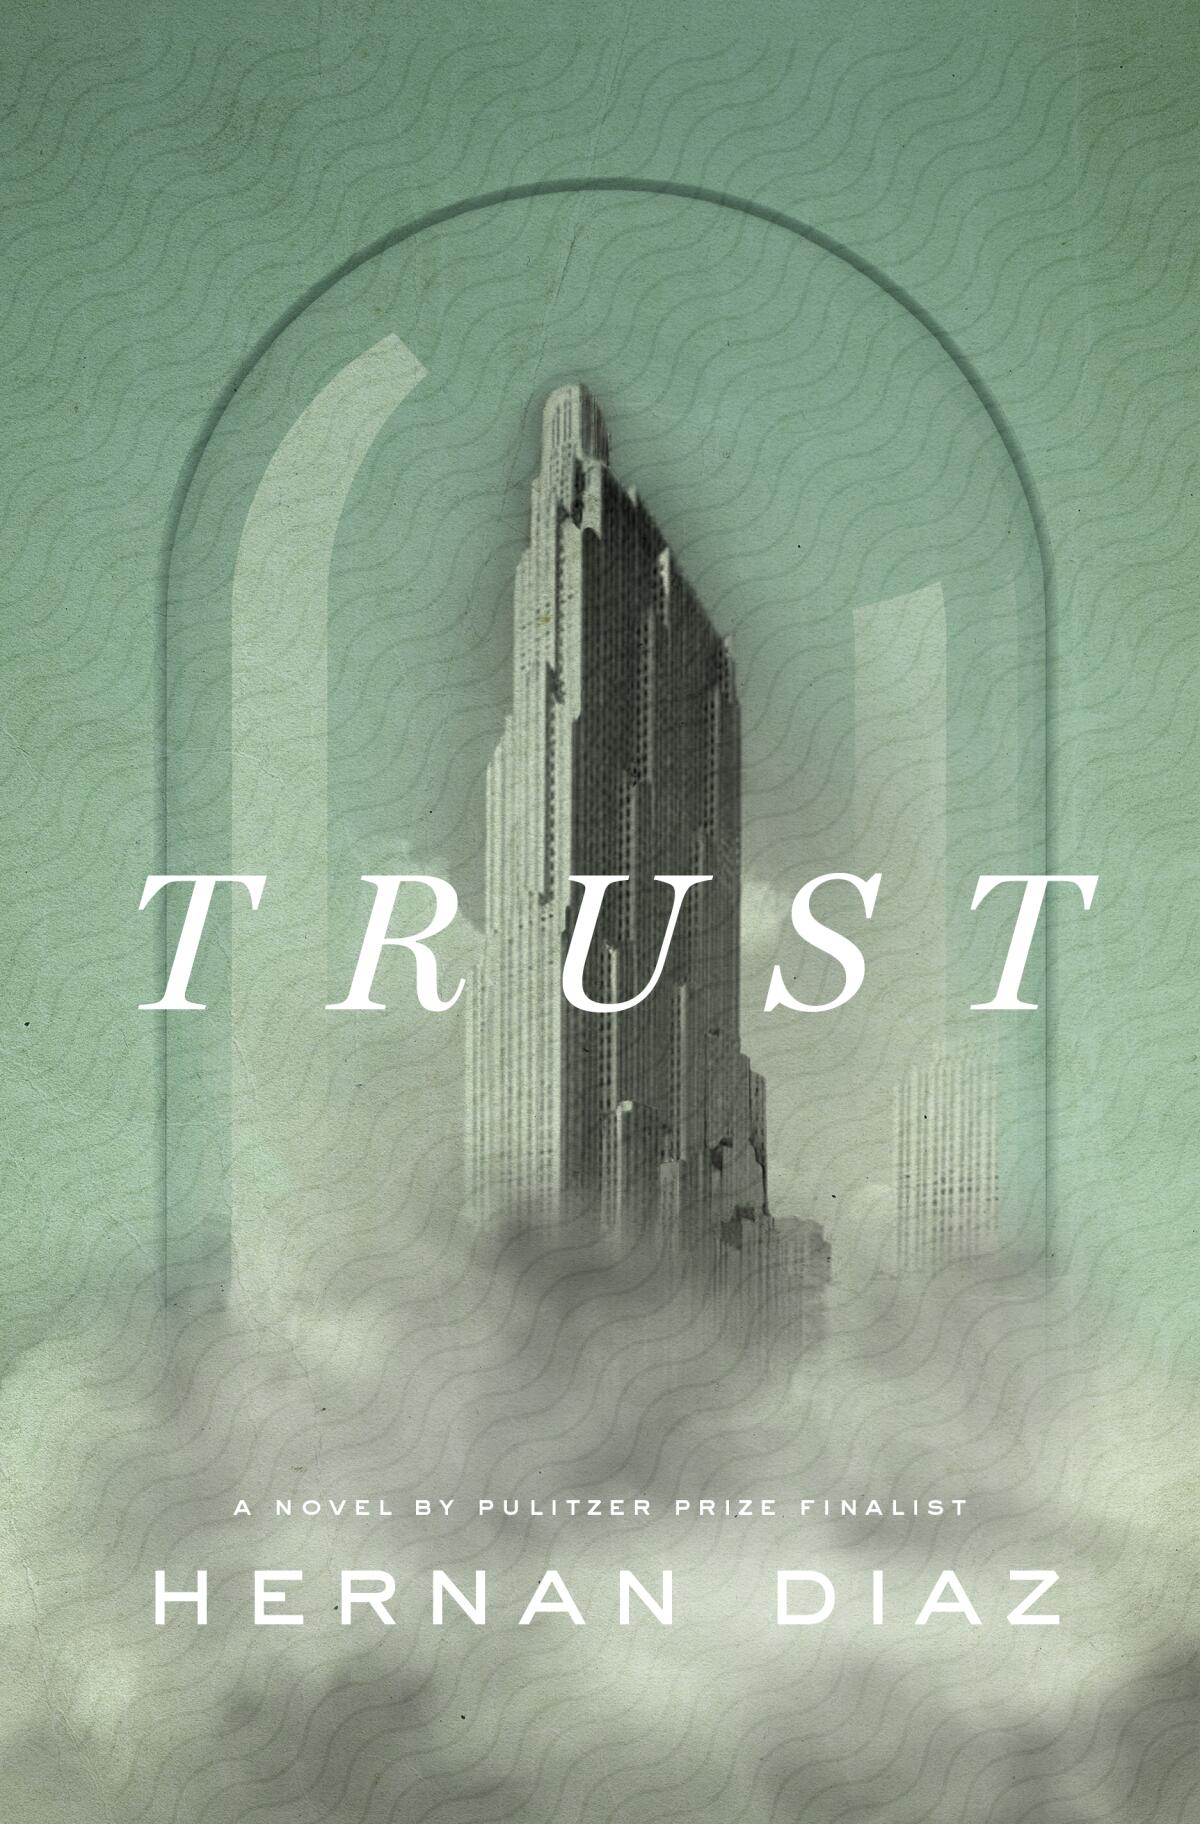 "Trust" by Hernan Diaz